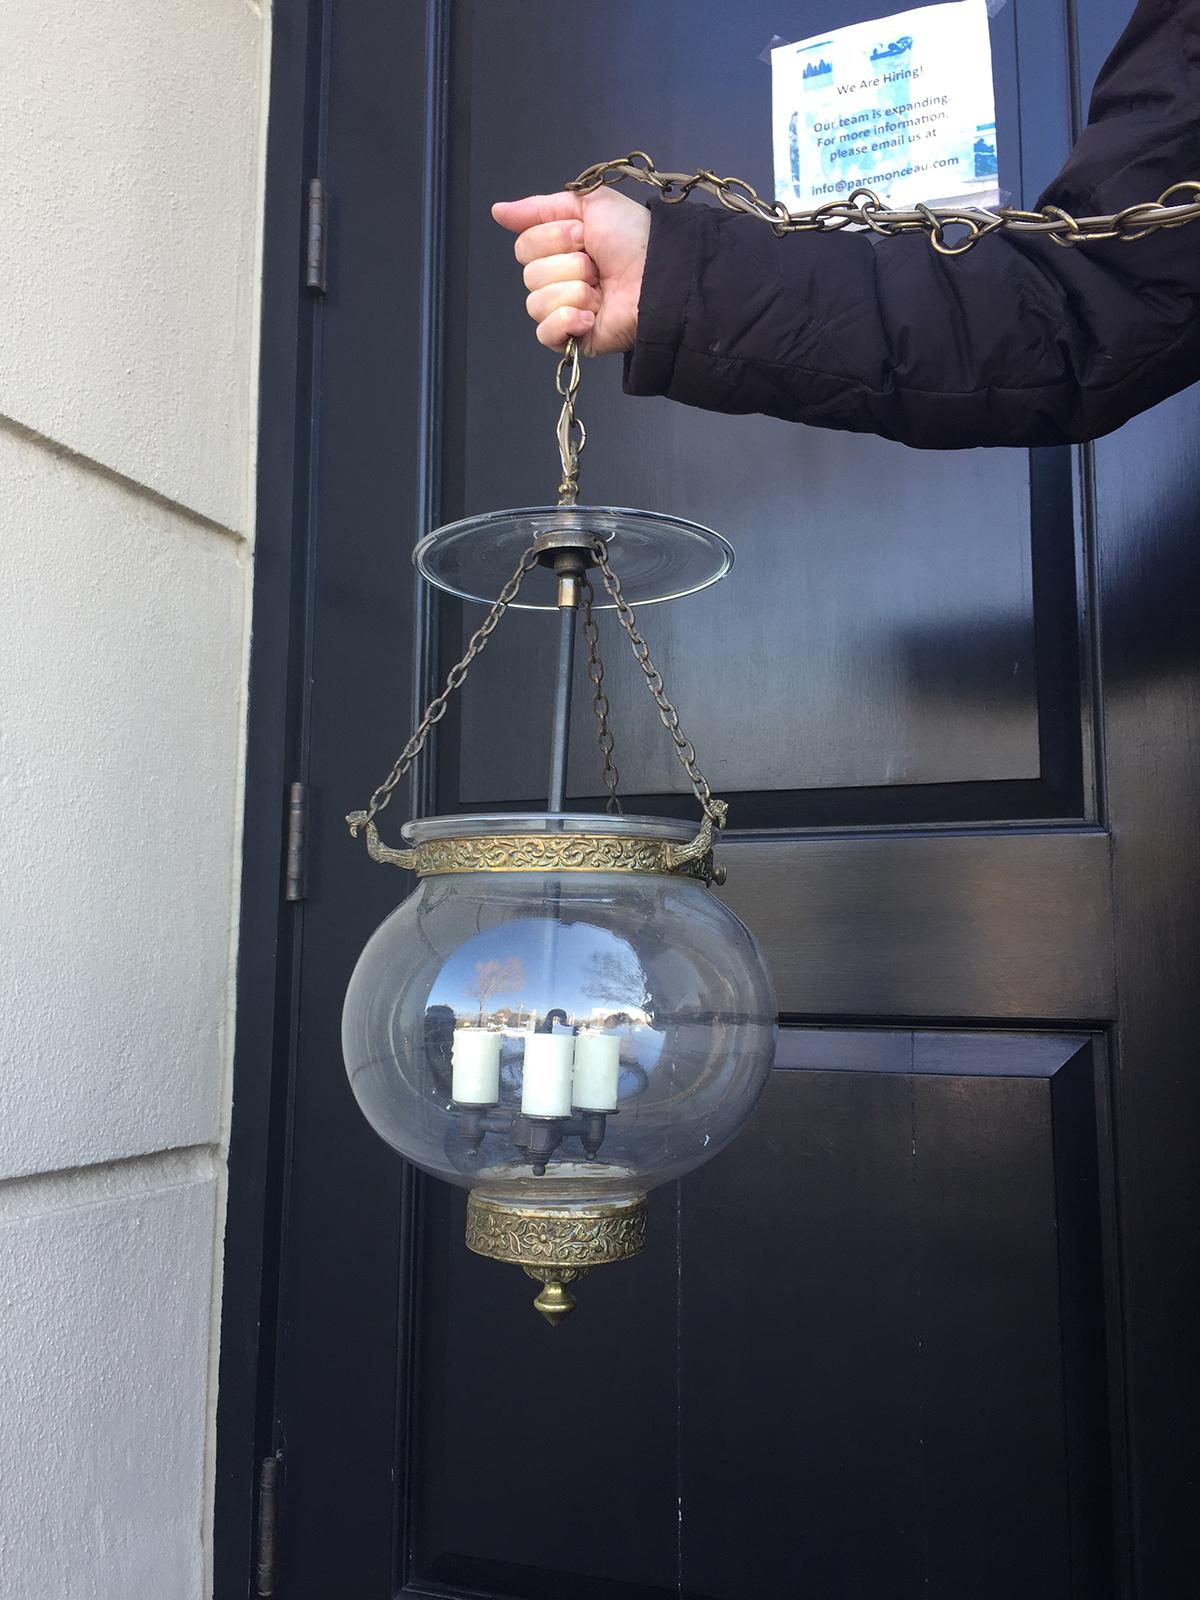 Small 19th century English glass bell jar lantern with brass and smokebell
Brand new wiring
Three lights.